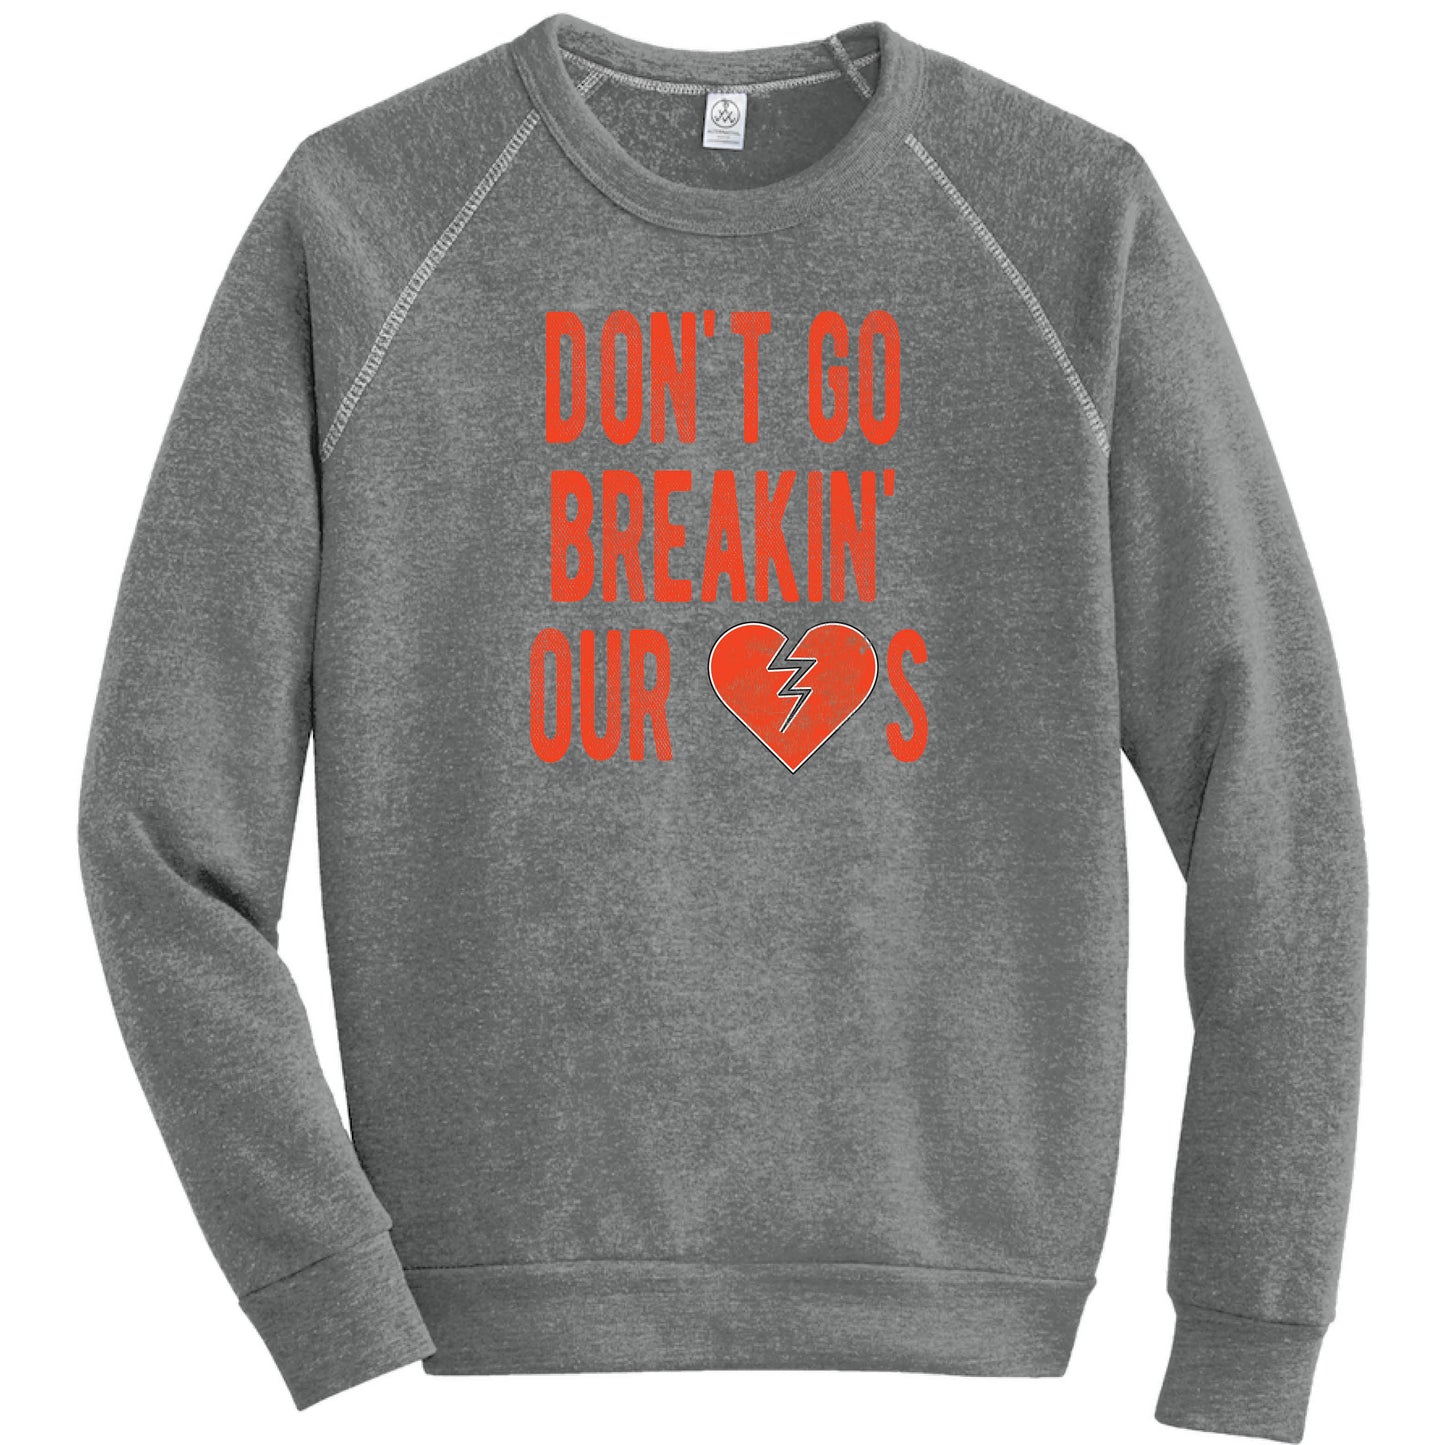 Don't Go Breaking Our Hearts - Cleveland - Fleece Sweatshirt